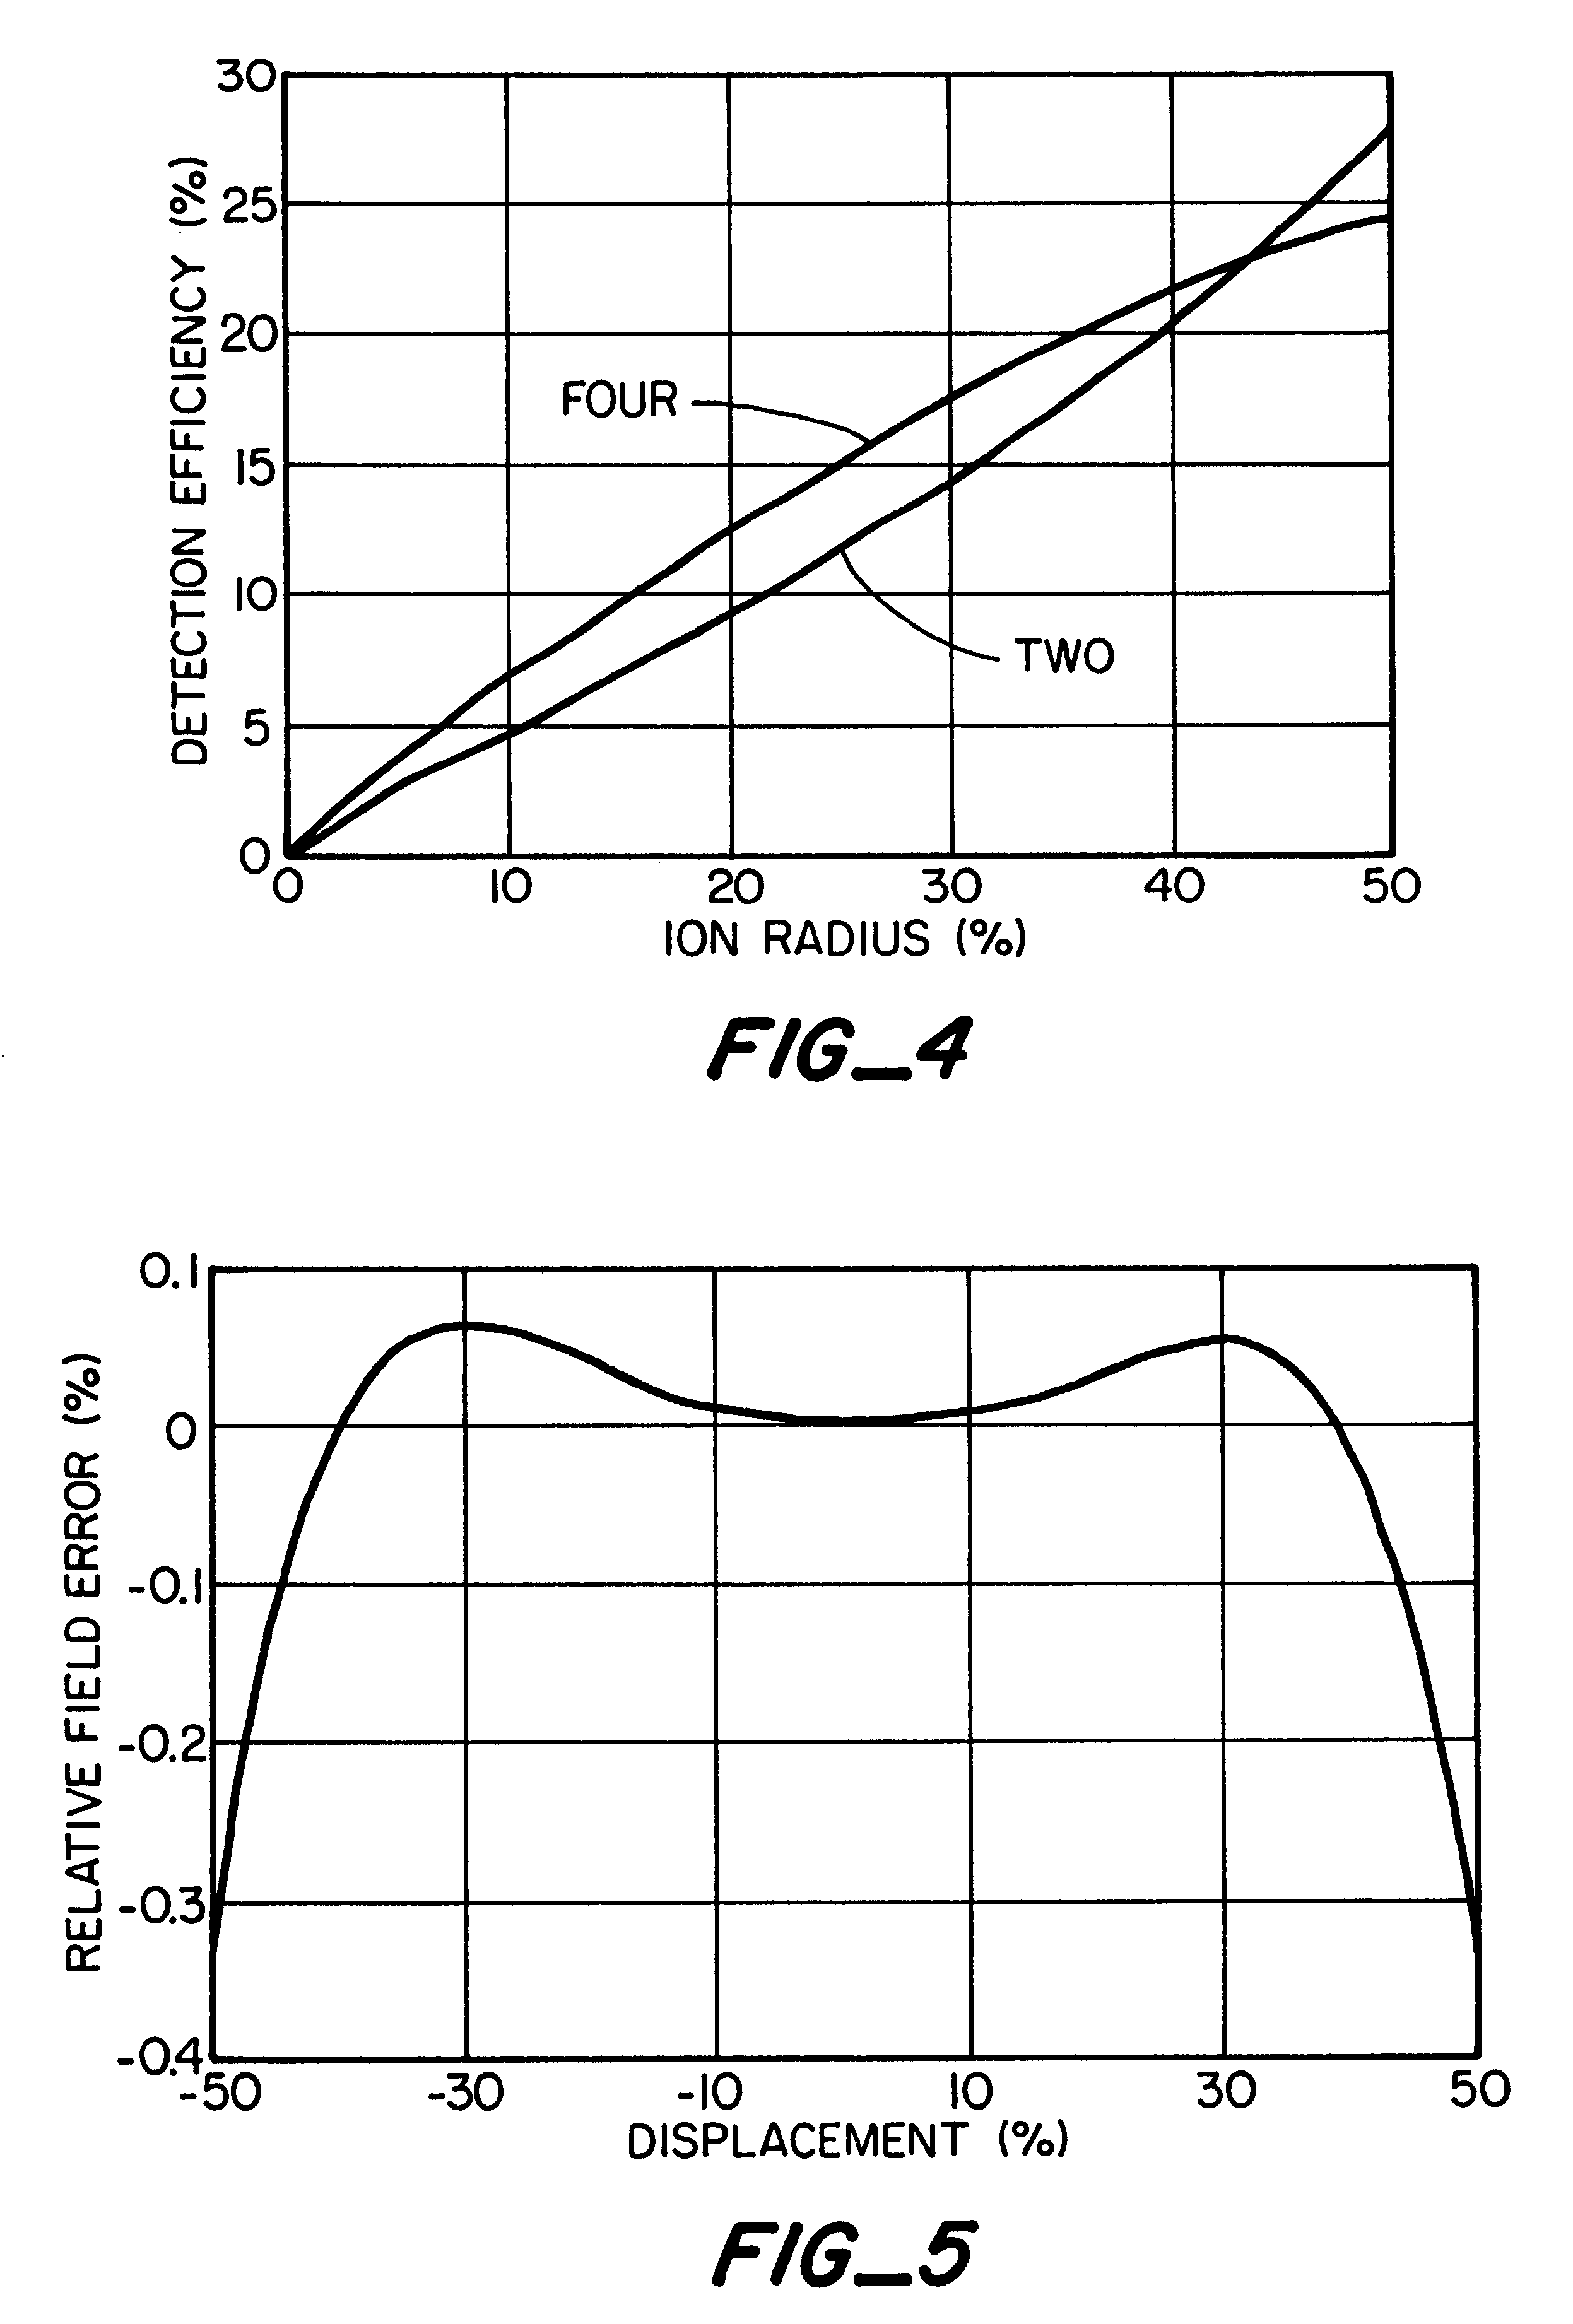 Linear quadrupole mass spectrometer